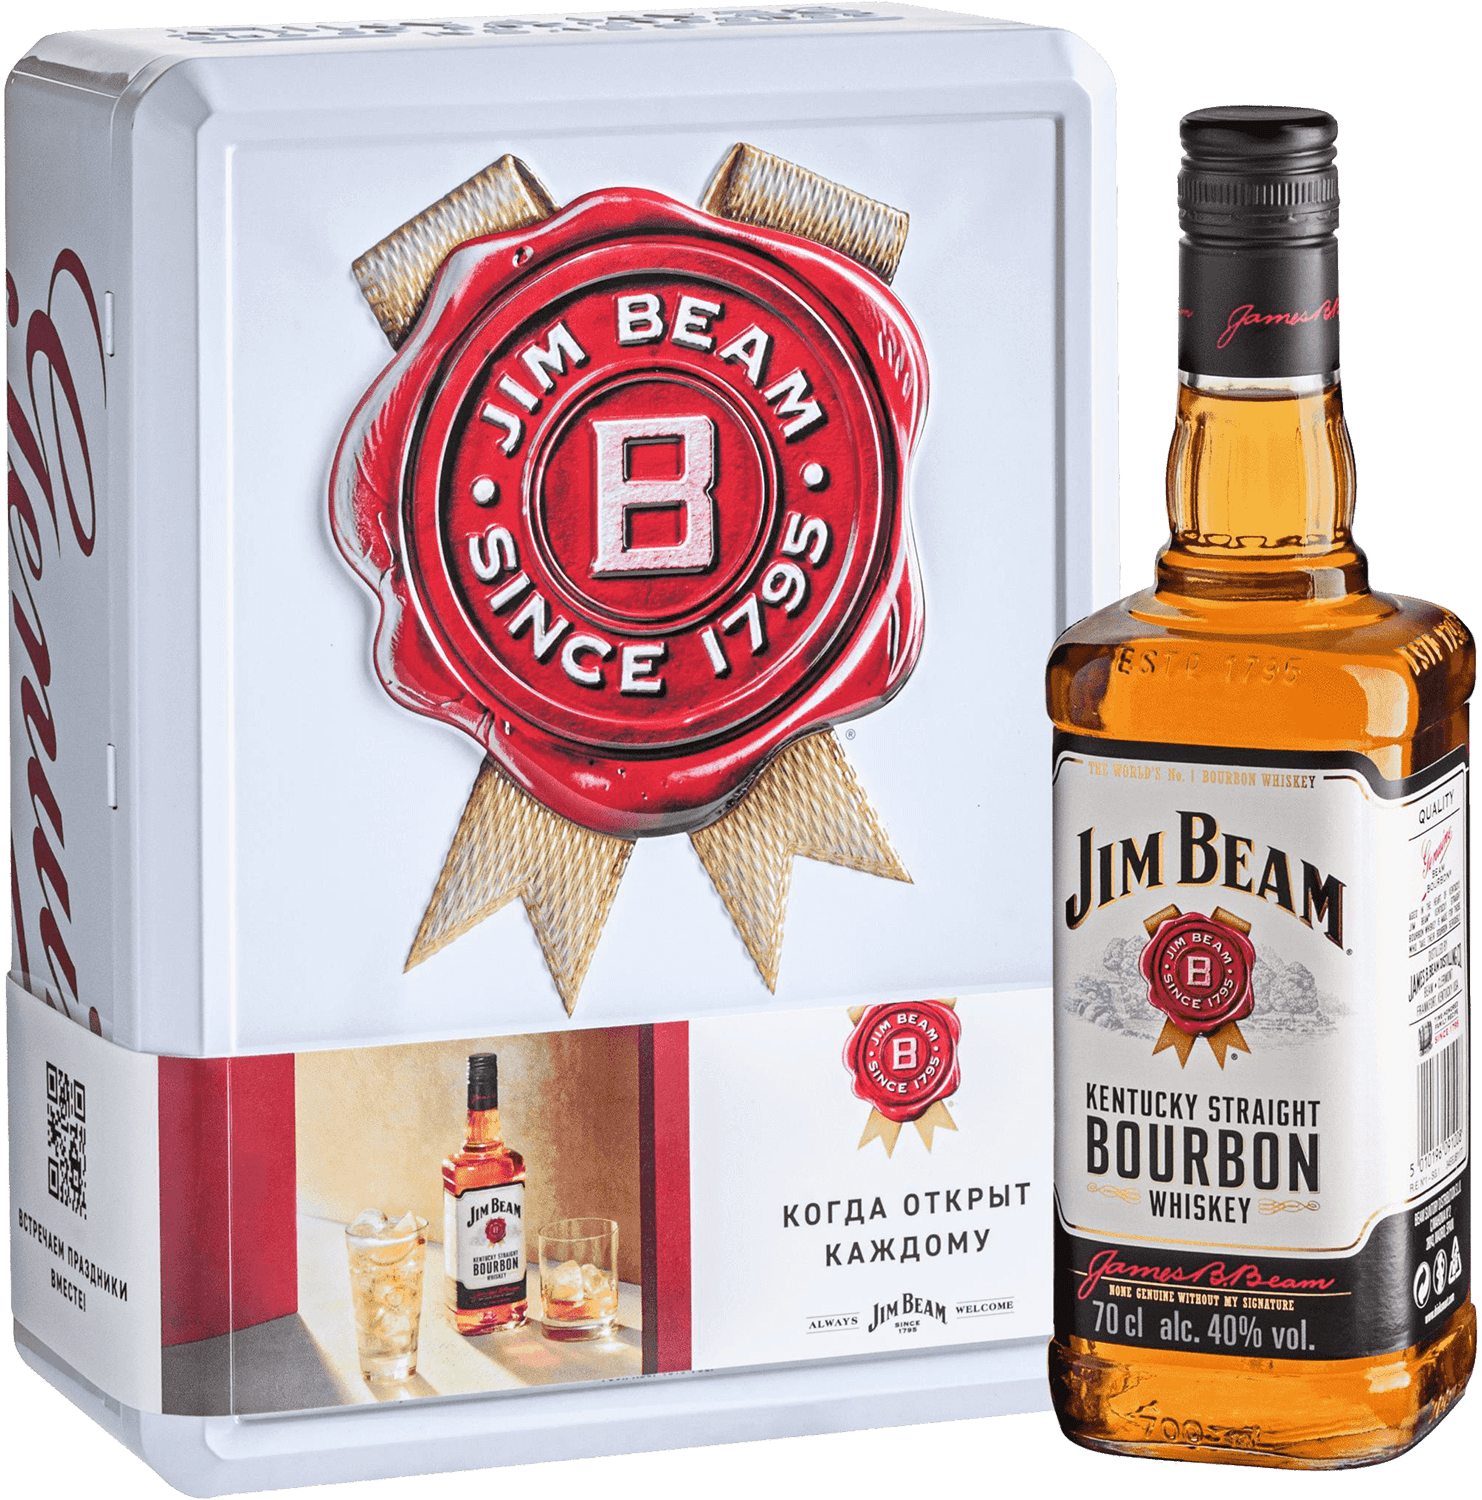 Jim Beam Kentucky Straight Bourbon Whiskey (gift box with 2 glasses) elijah craig small batch kentucky straight bourbon whiskey